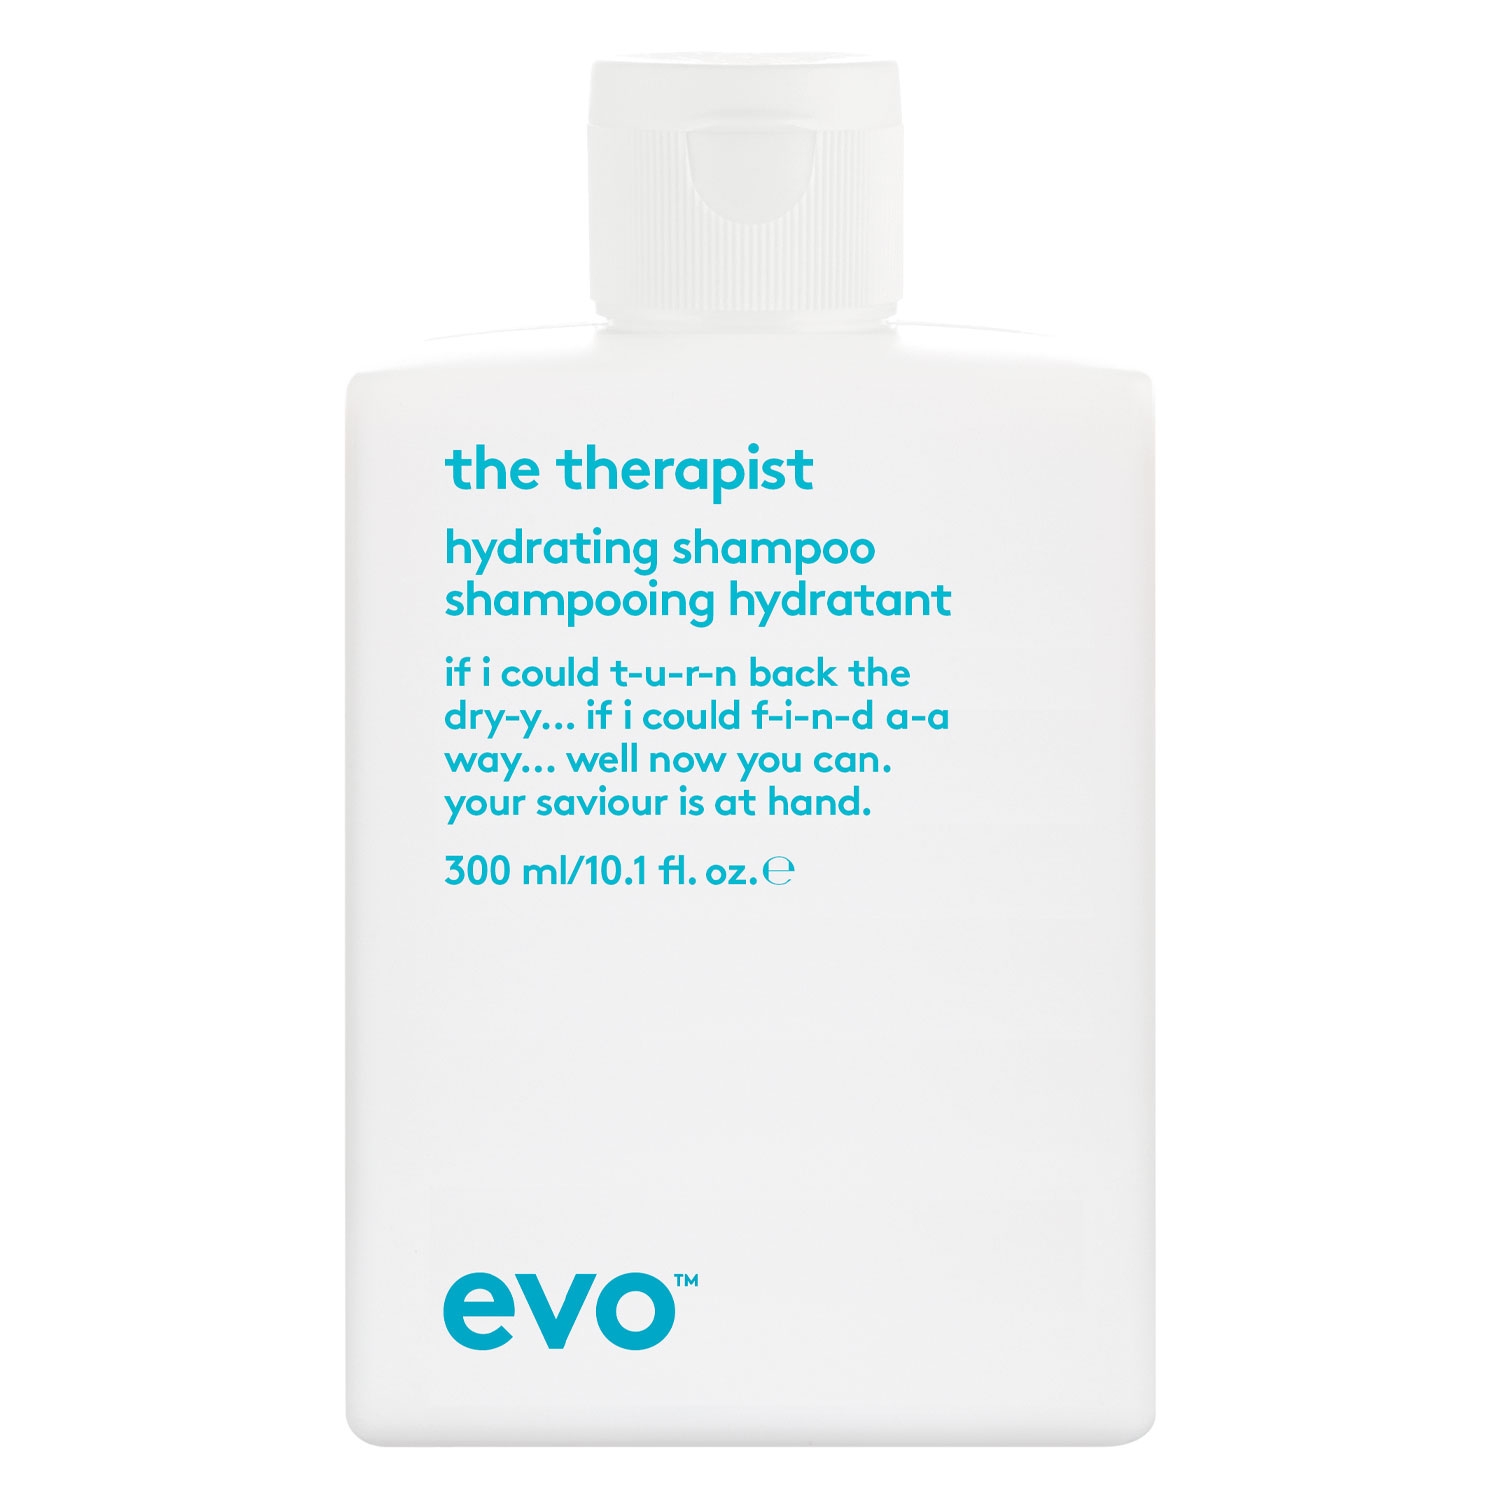 Produktbild von evo calm - the therapist hydrating shampoo